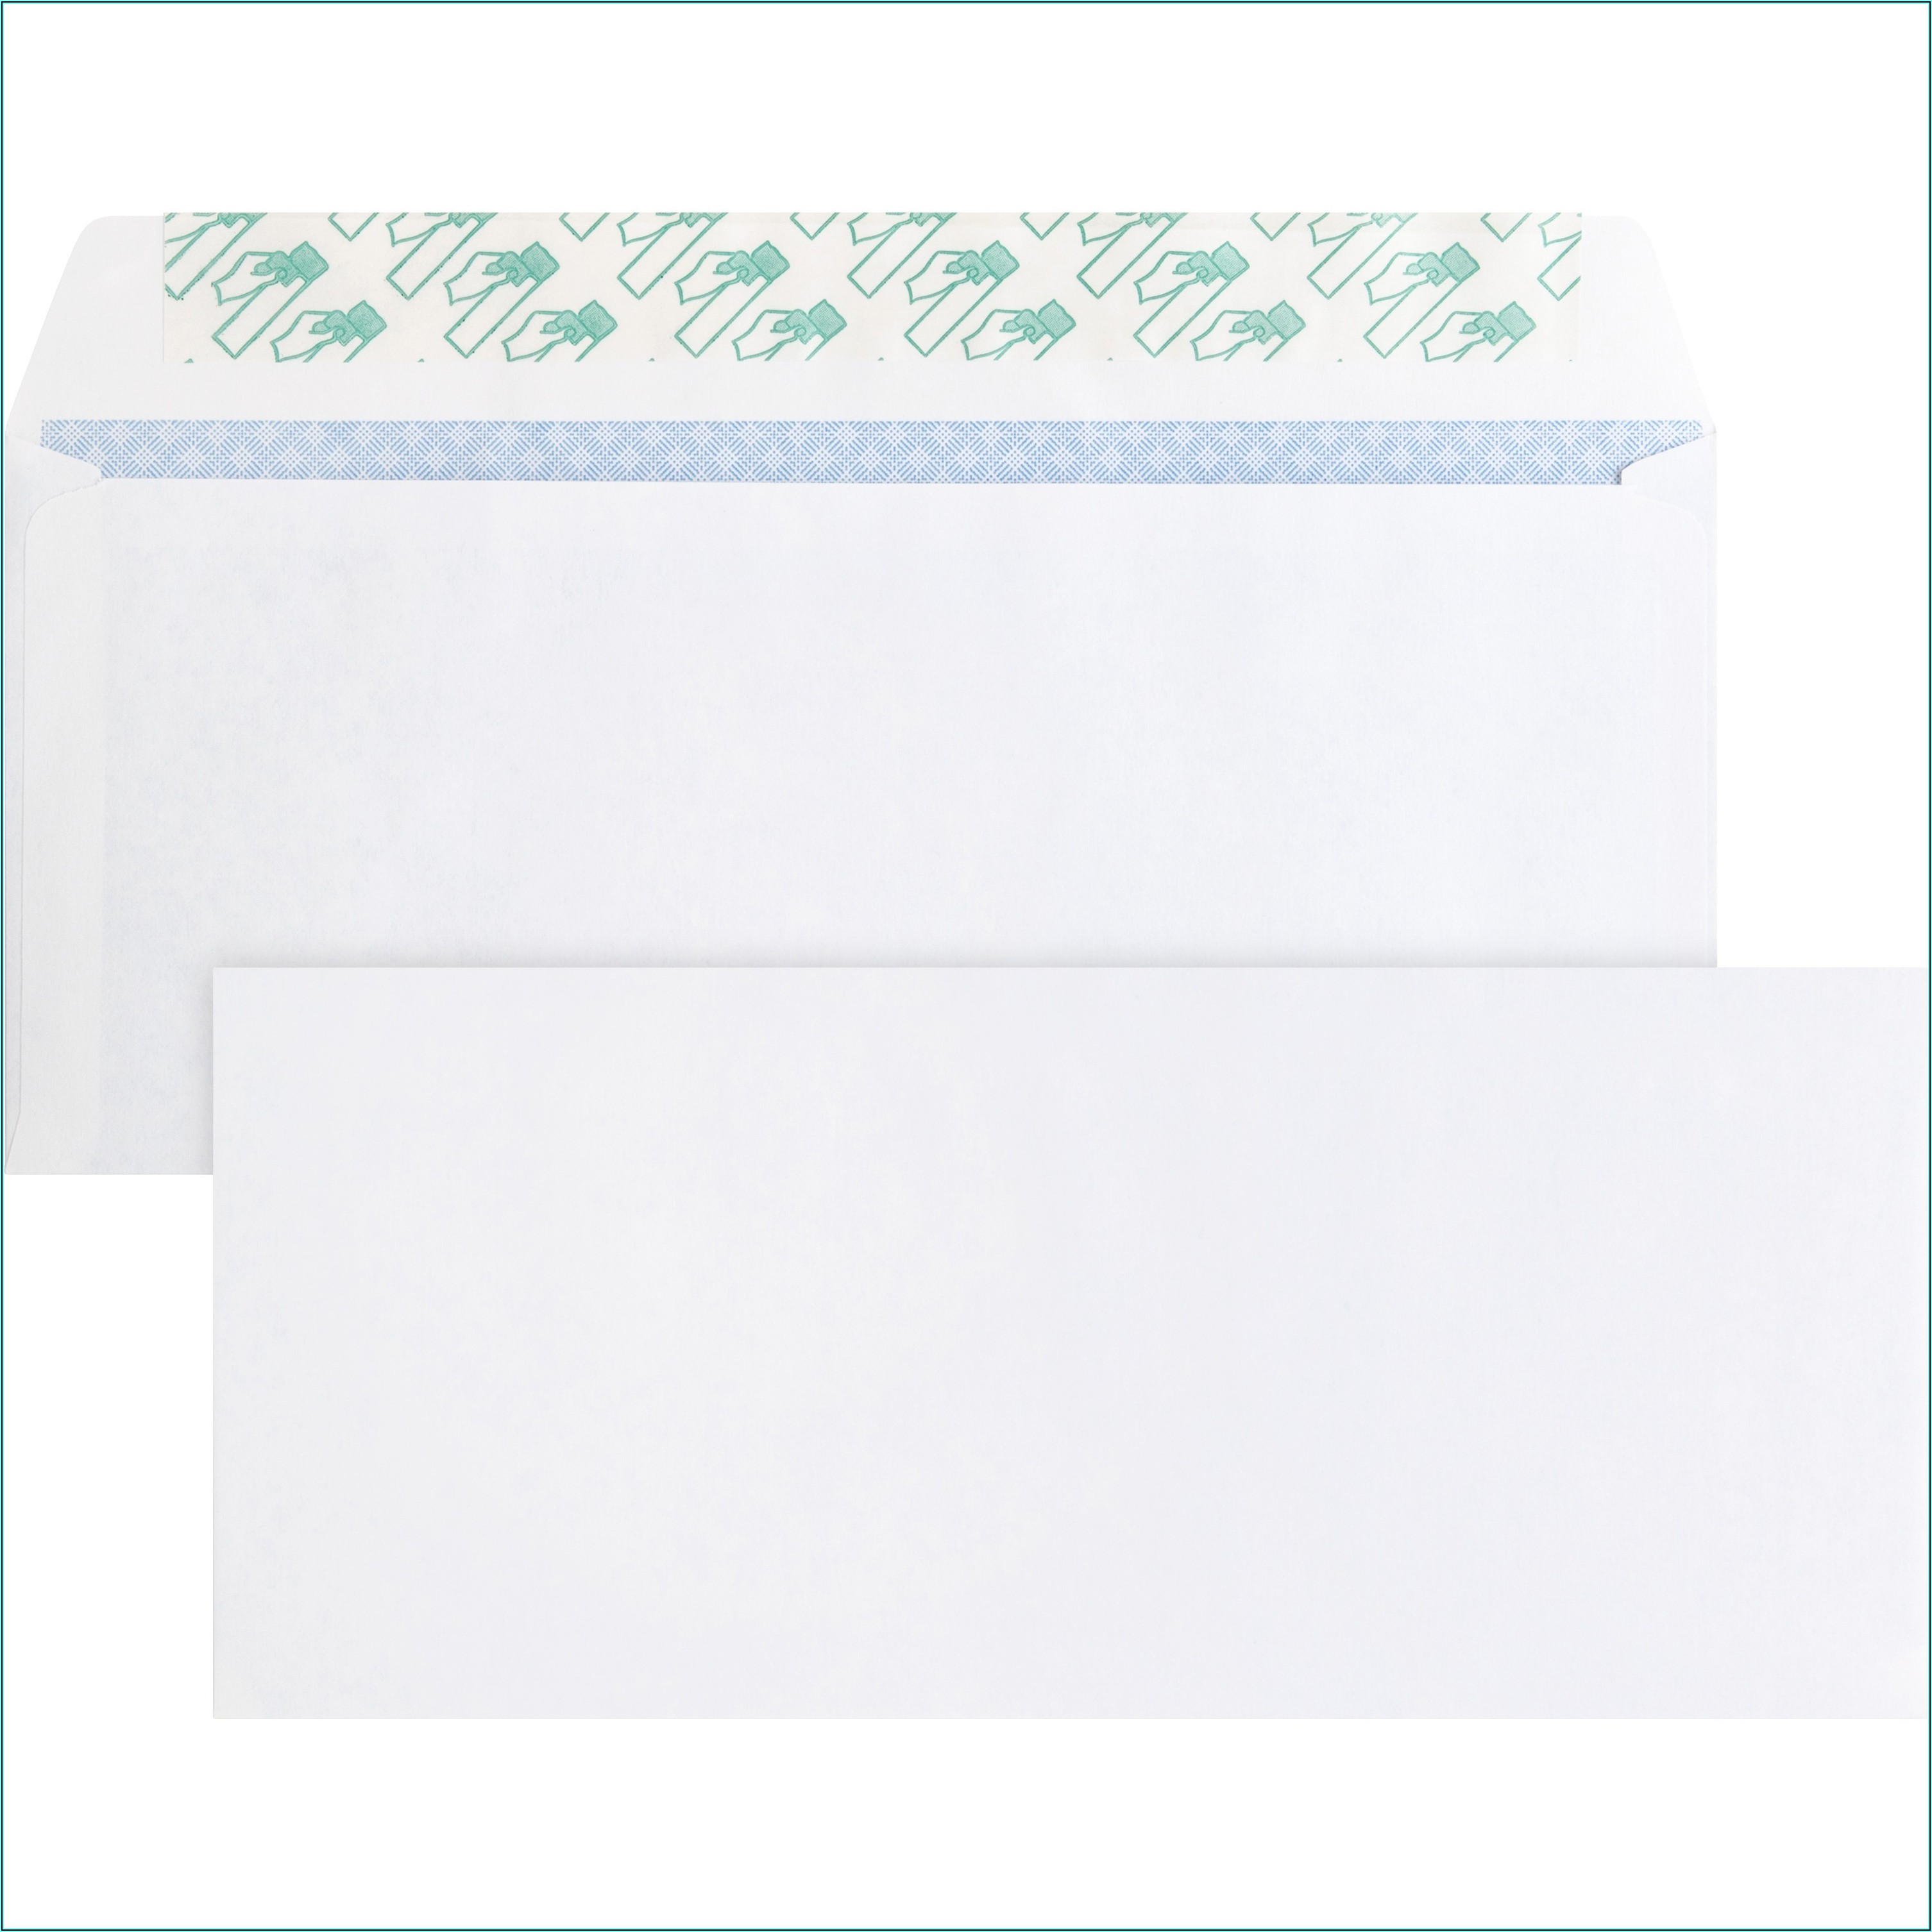 Columbian Security Tint Envelopes Grip Seal No. 10 500 Count